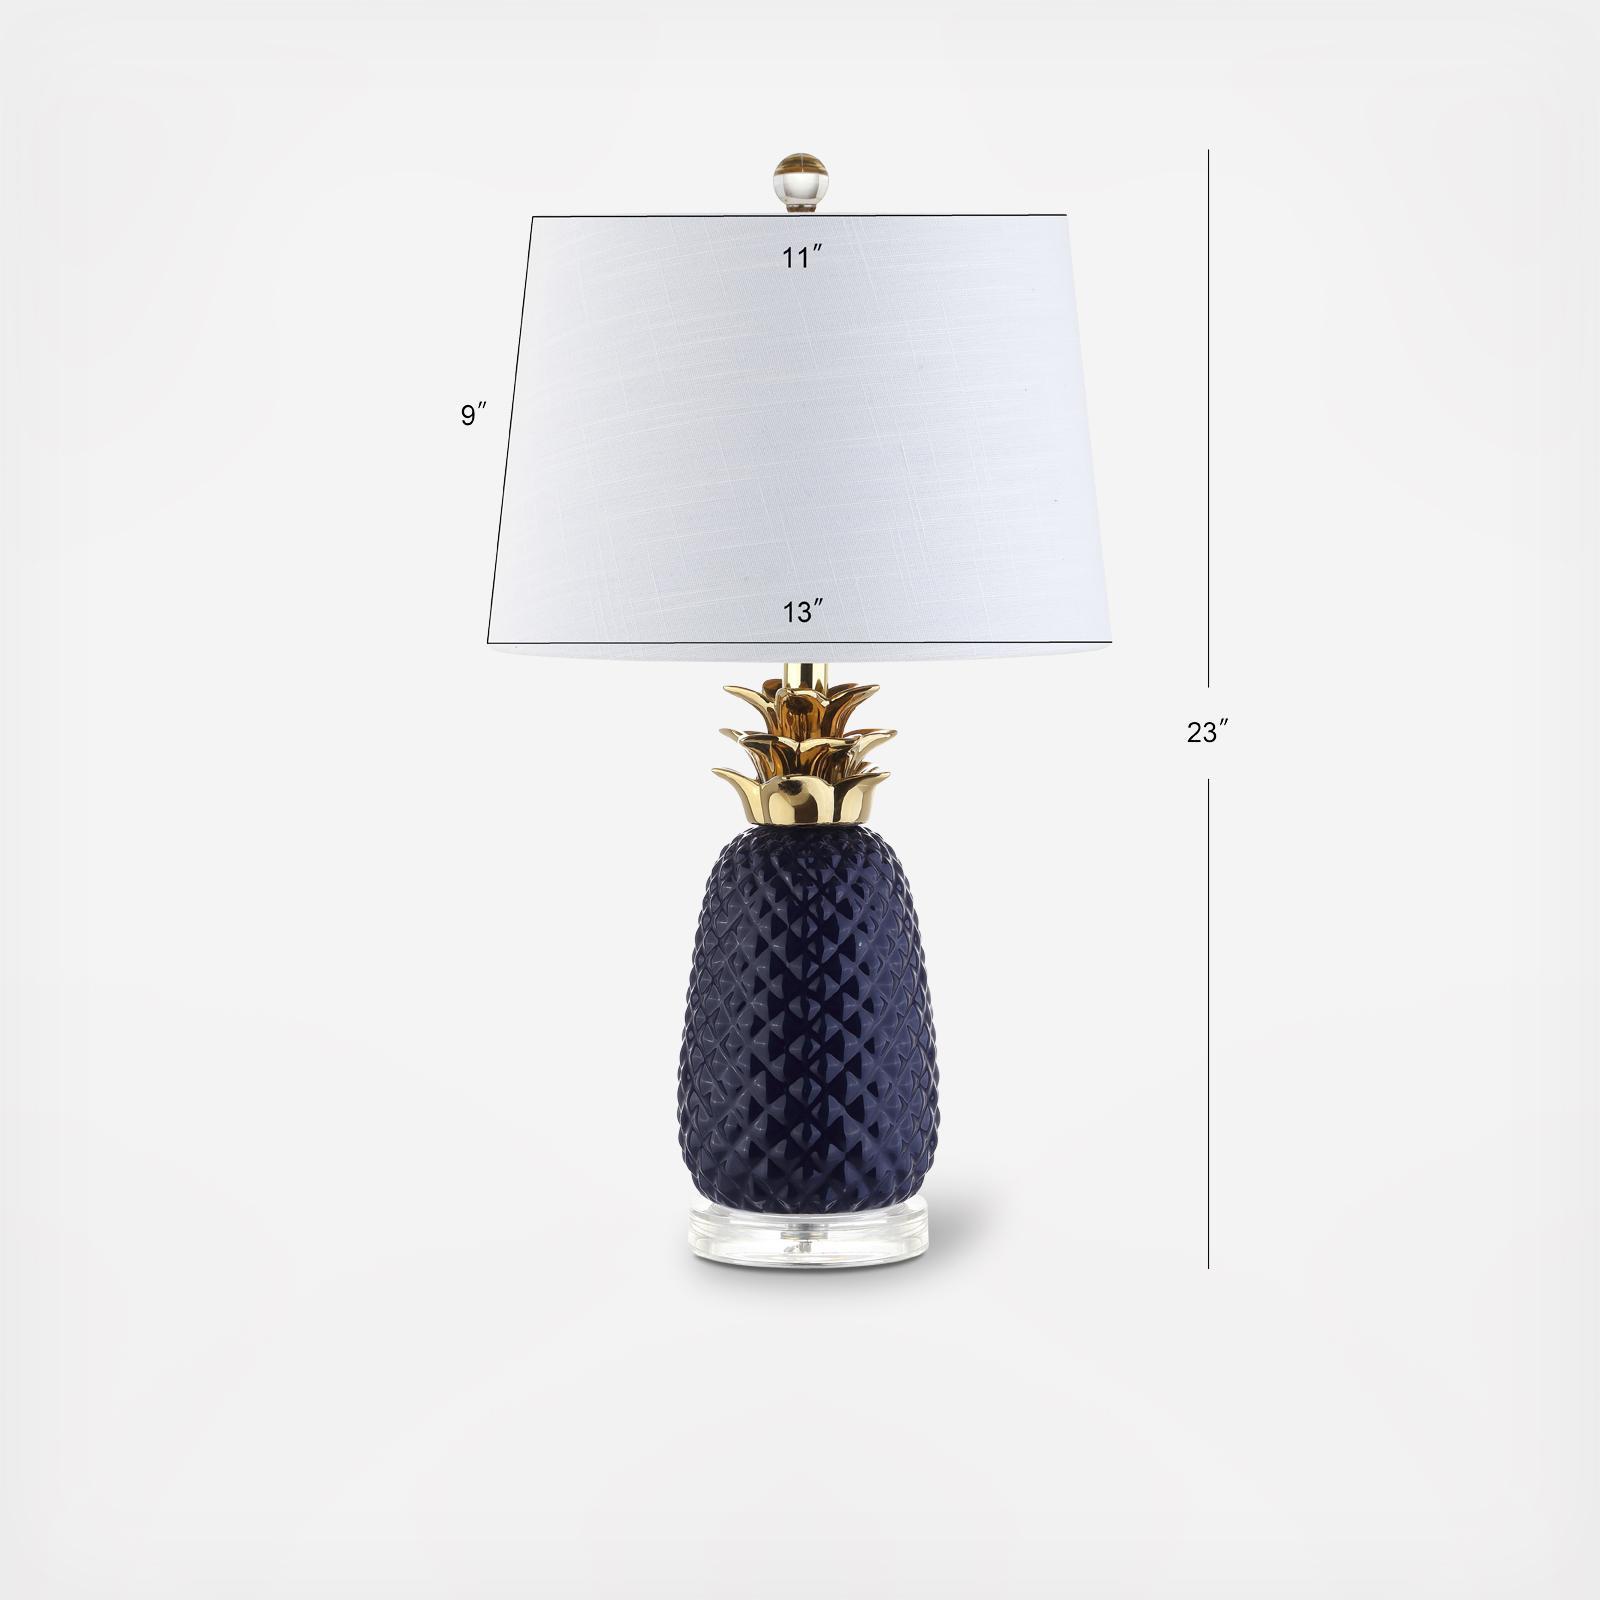 pineapple table lamp